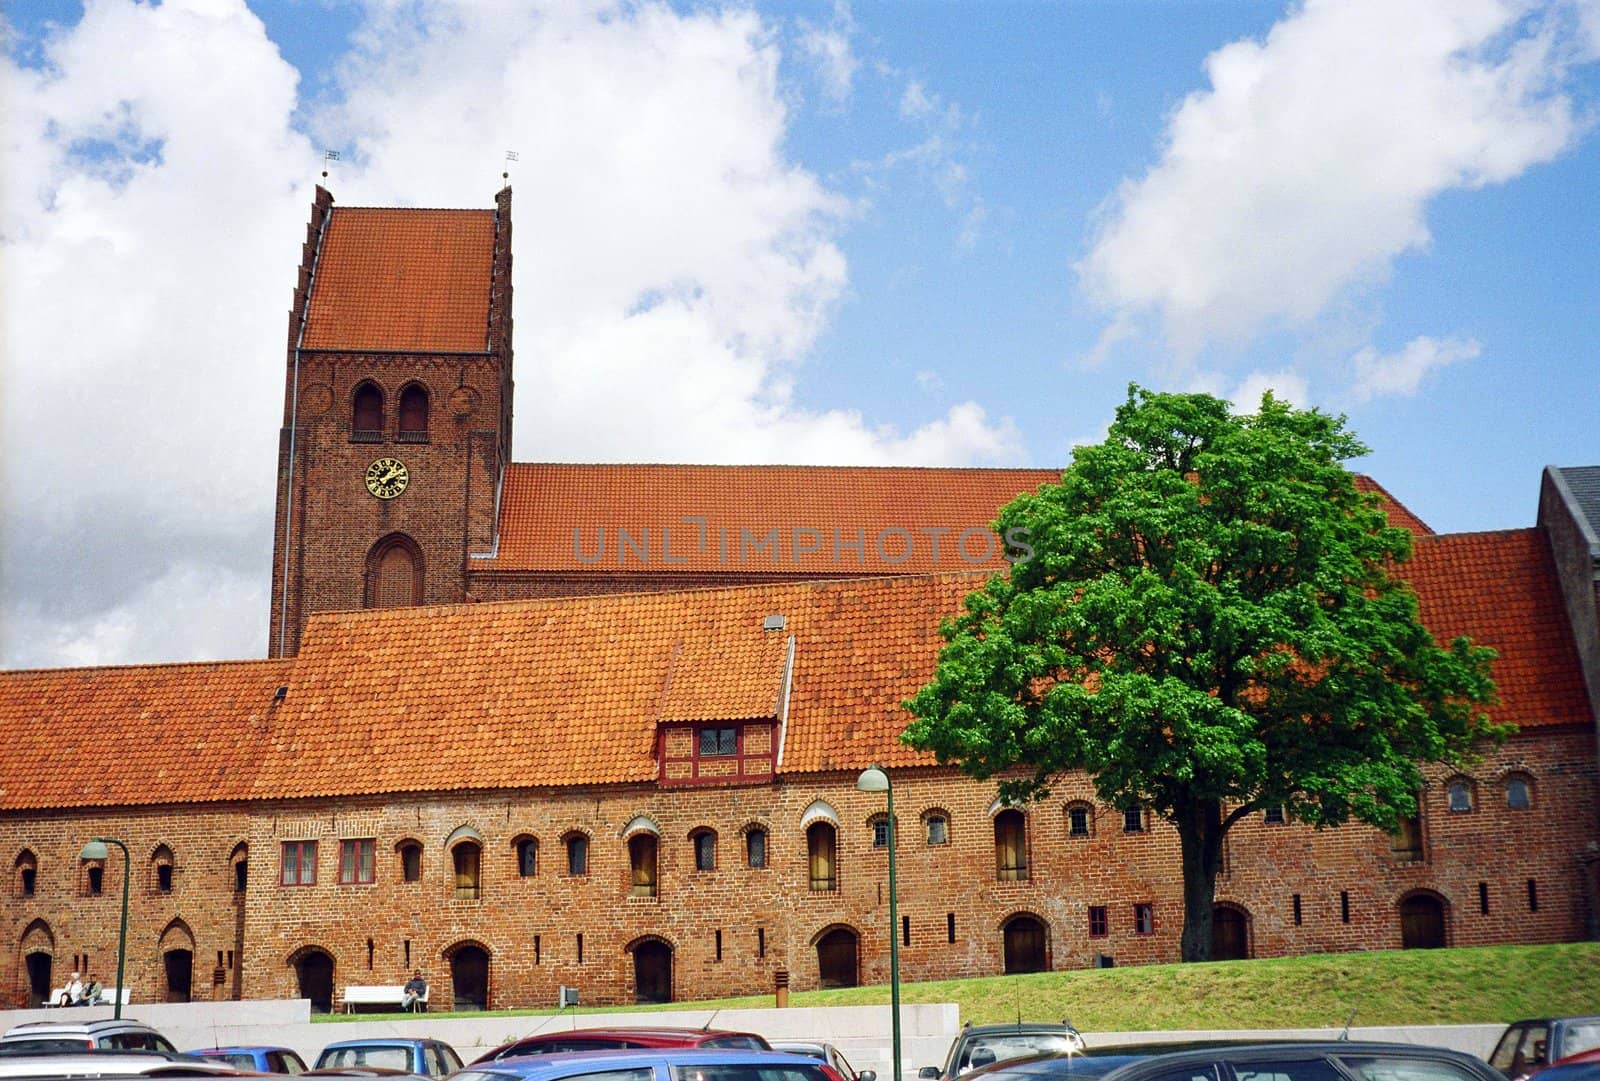 Landscape with church in Denmark